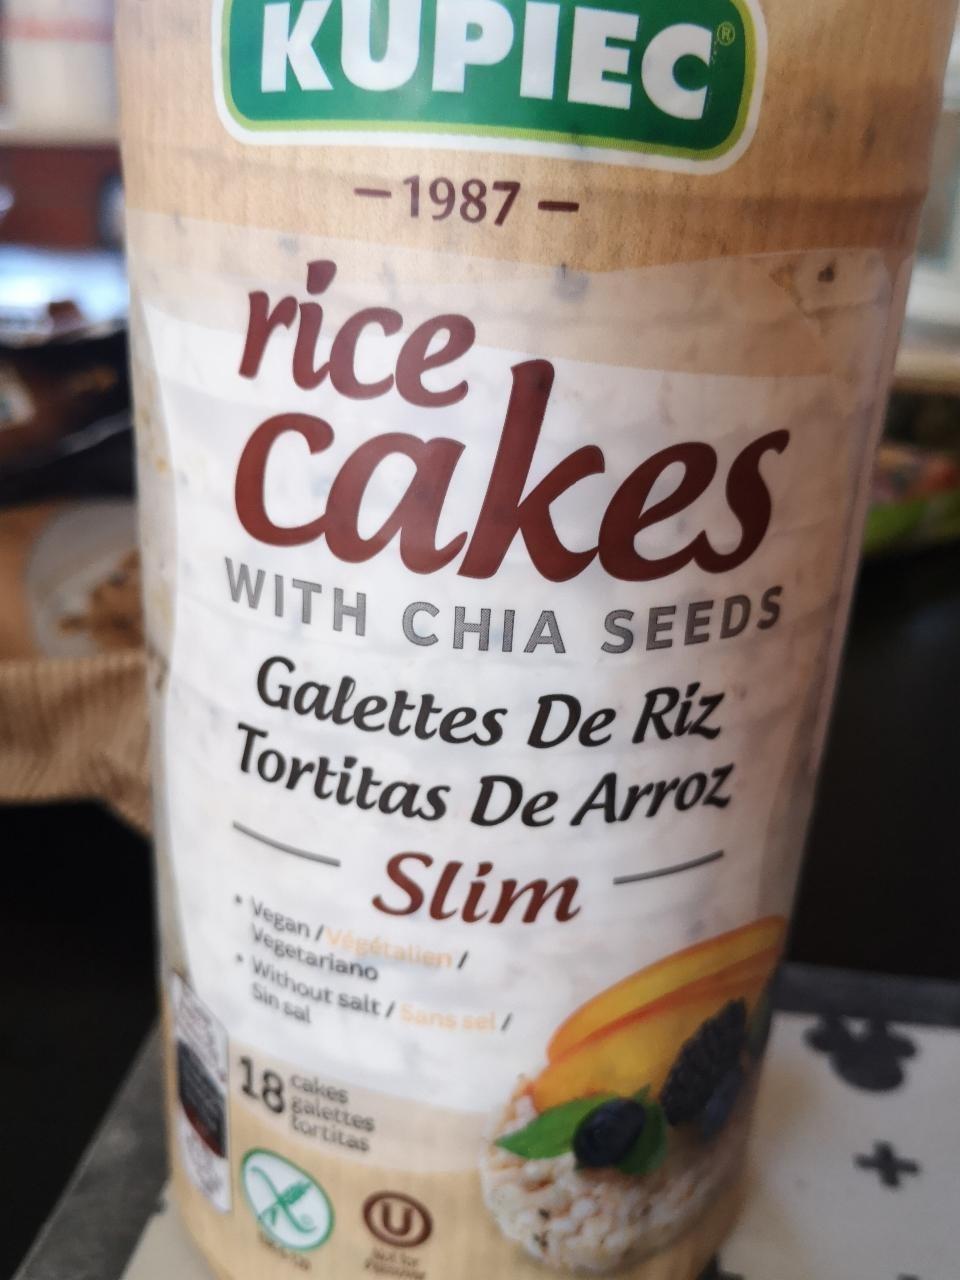 Képek - Rice cakes with chia seeds Kupiec